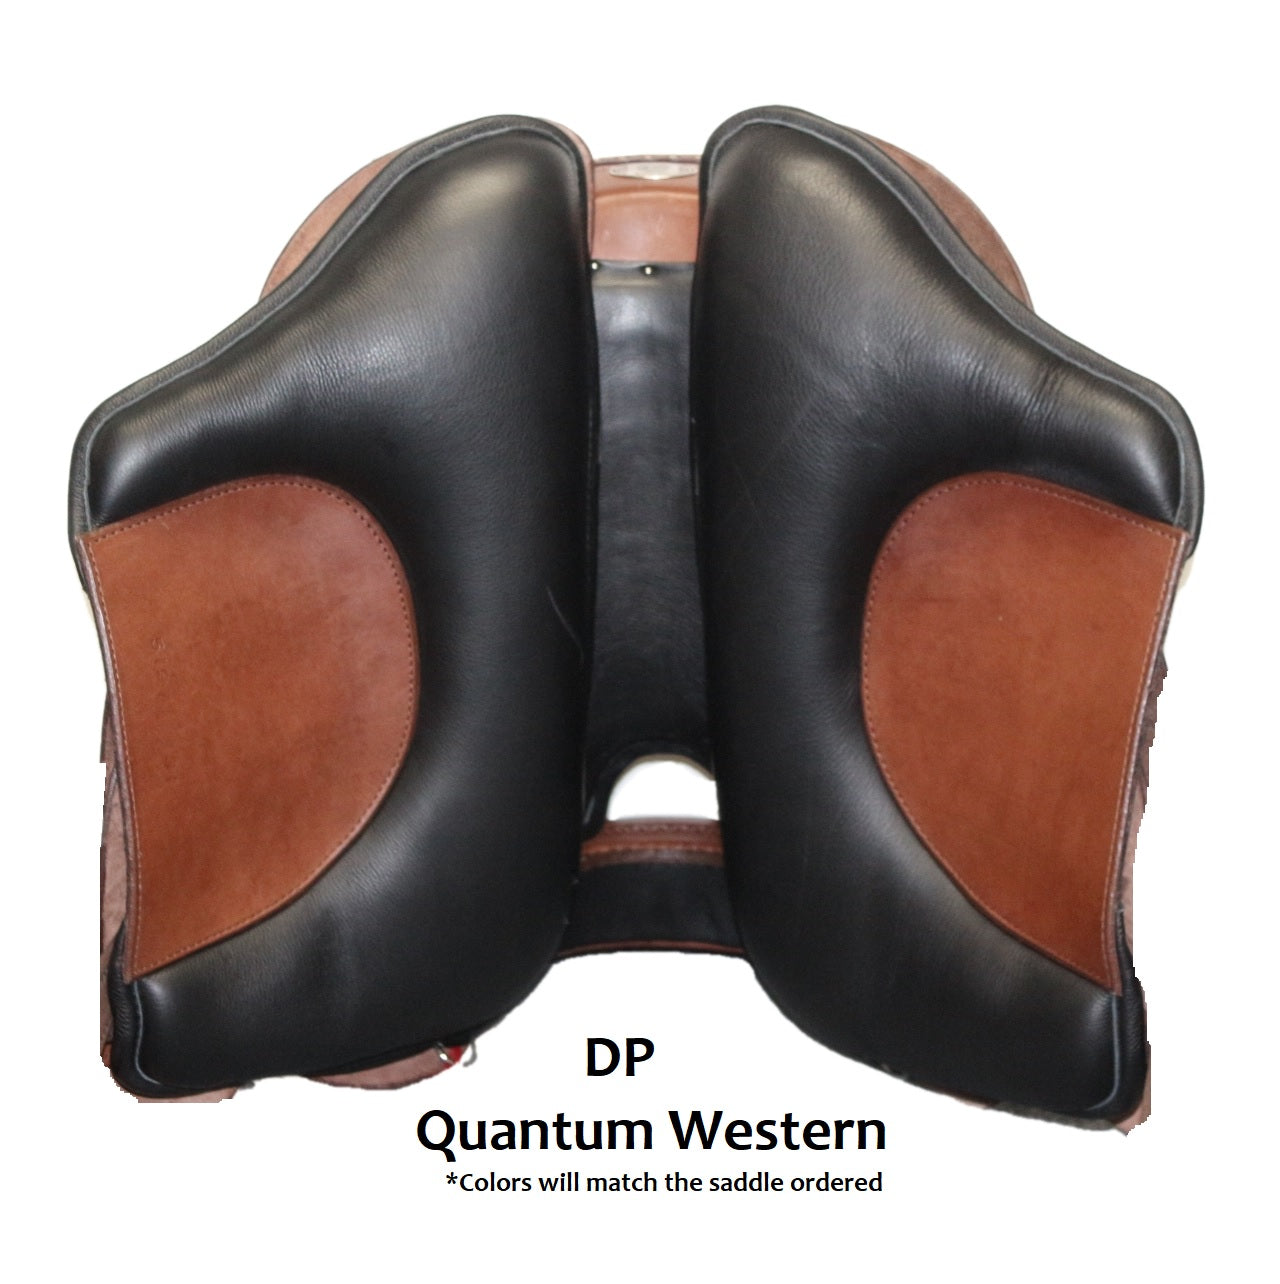 DP Saddlery Quantum Western 6901 S2